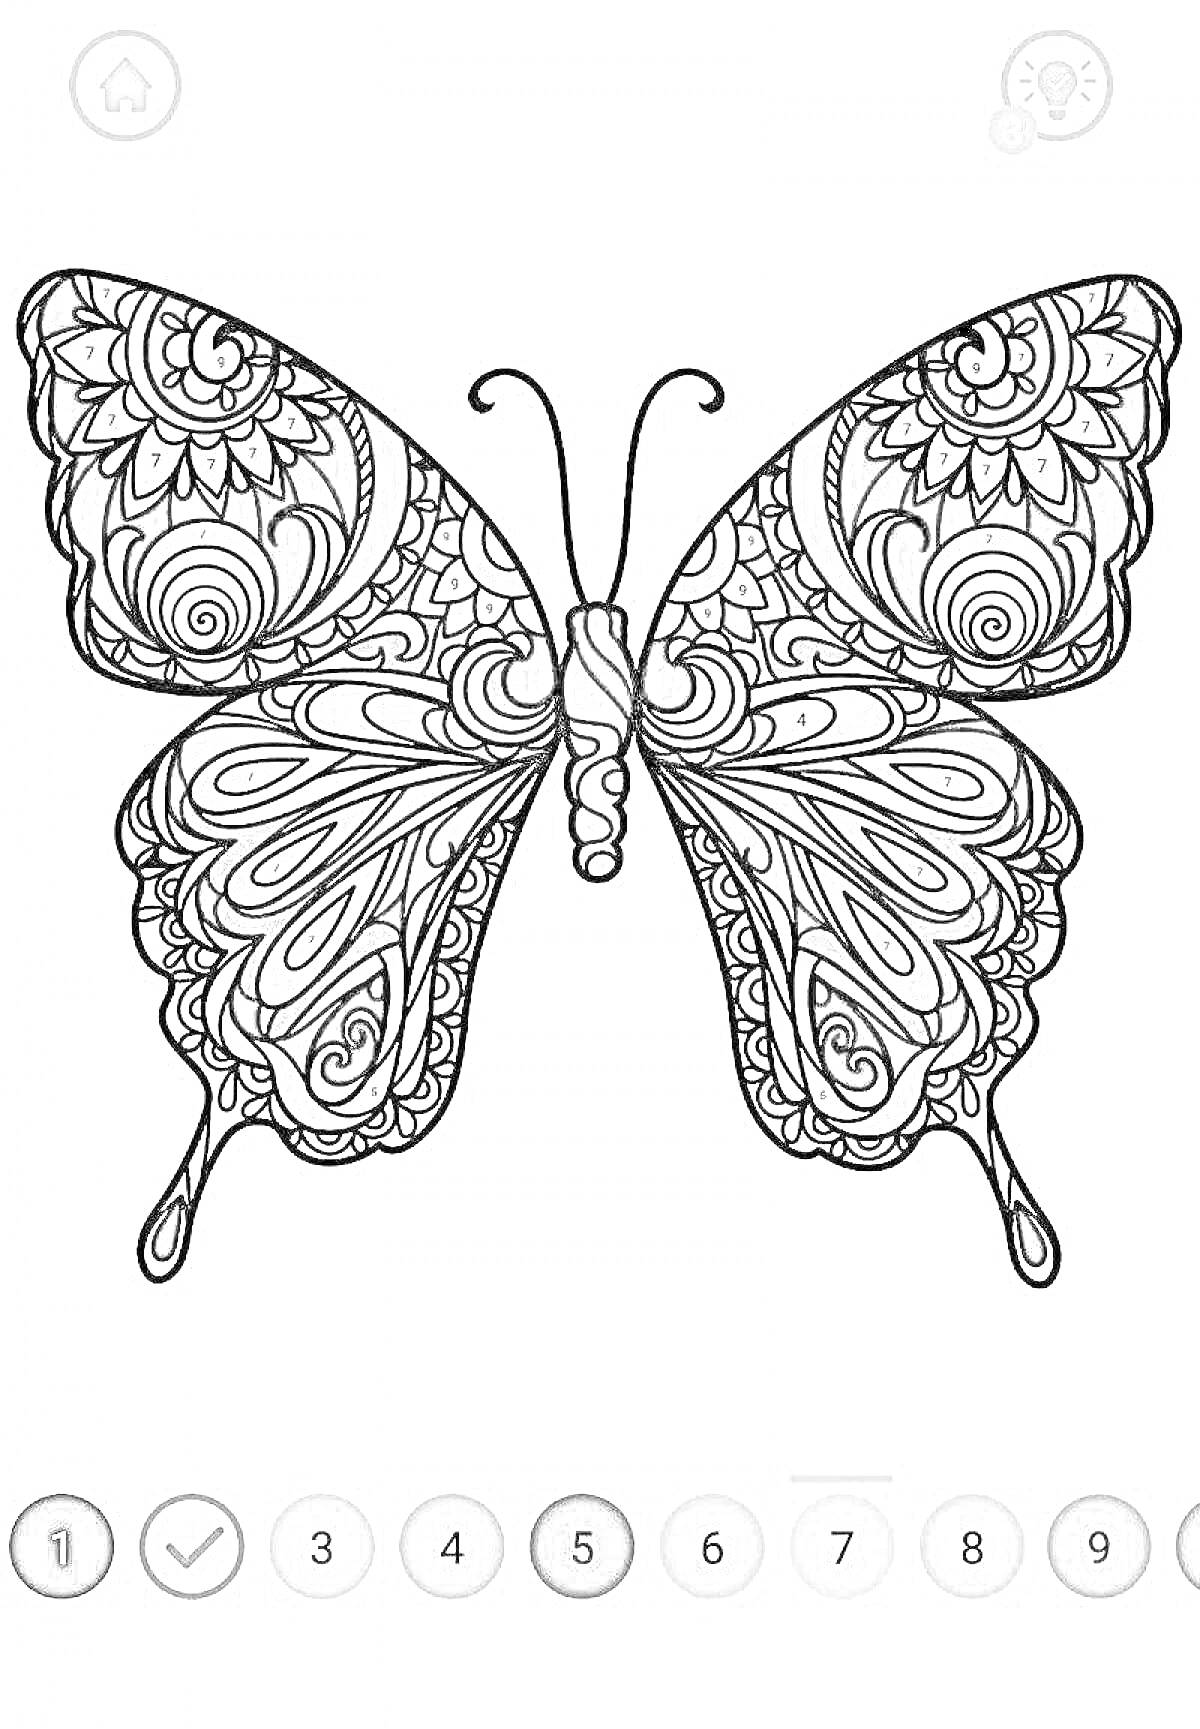 Раскраска мандала в форме бабочки с узорами